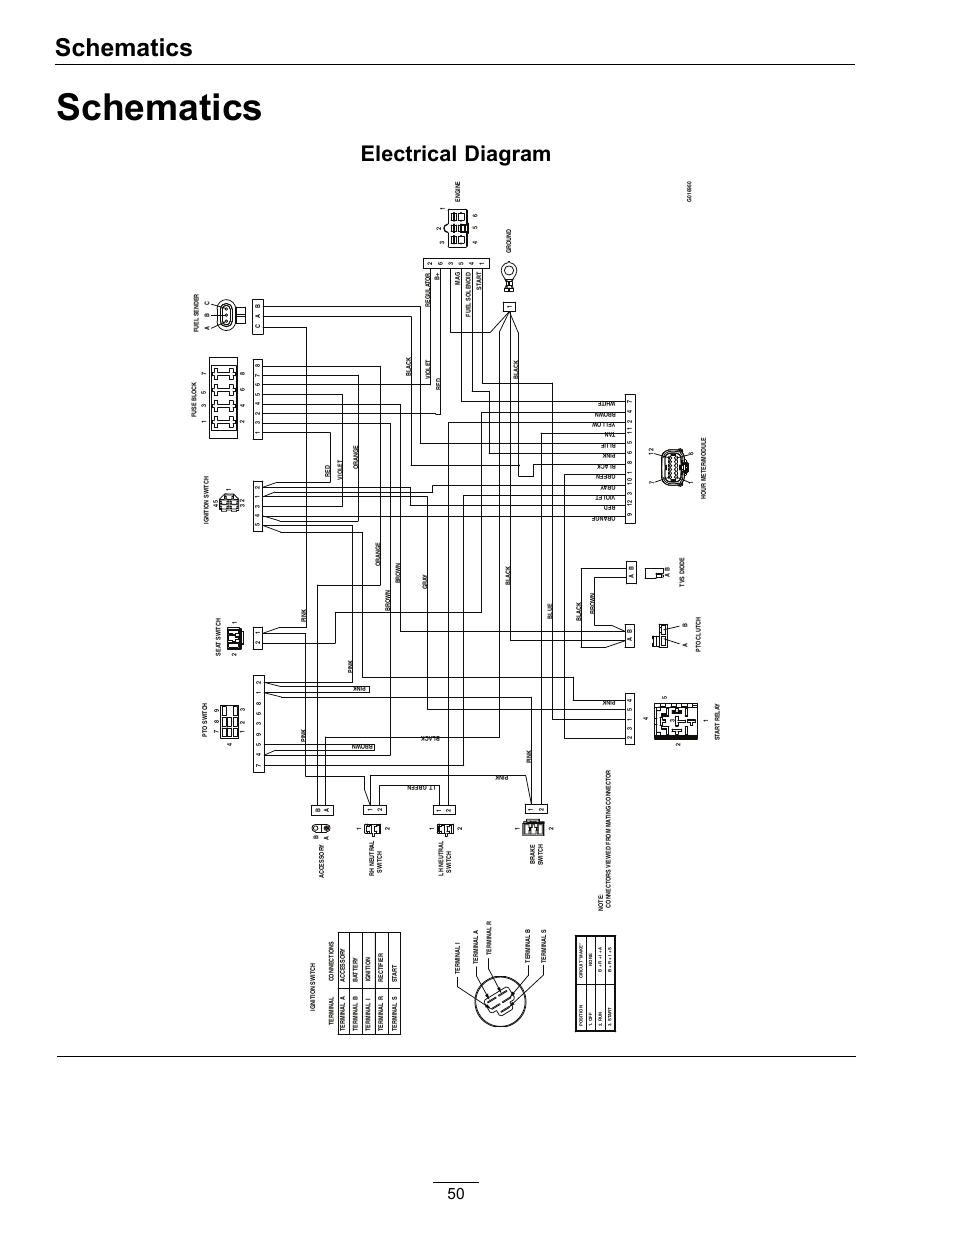 8141-00m defrost timer wiring diagram